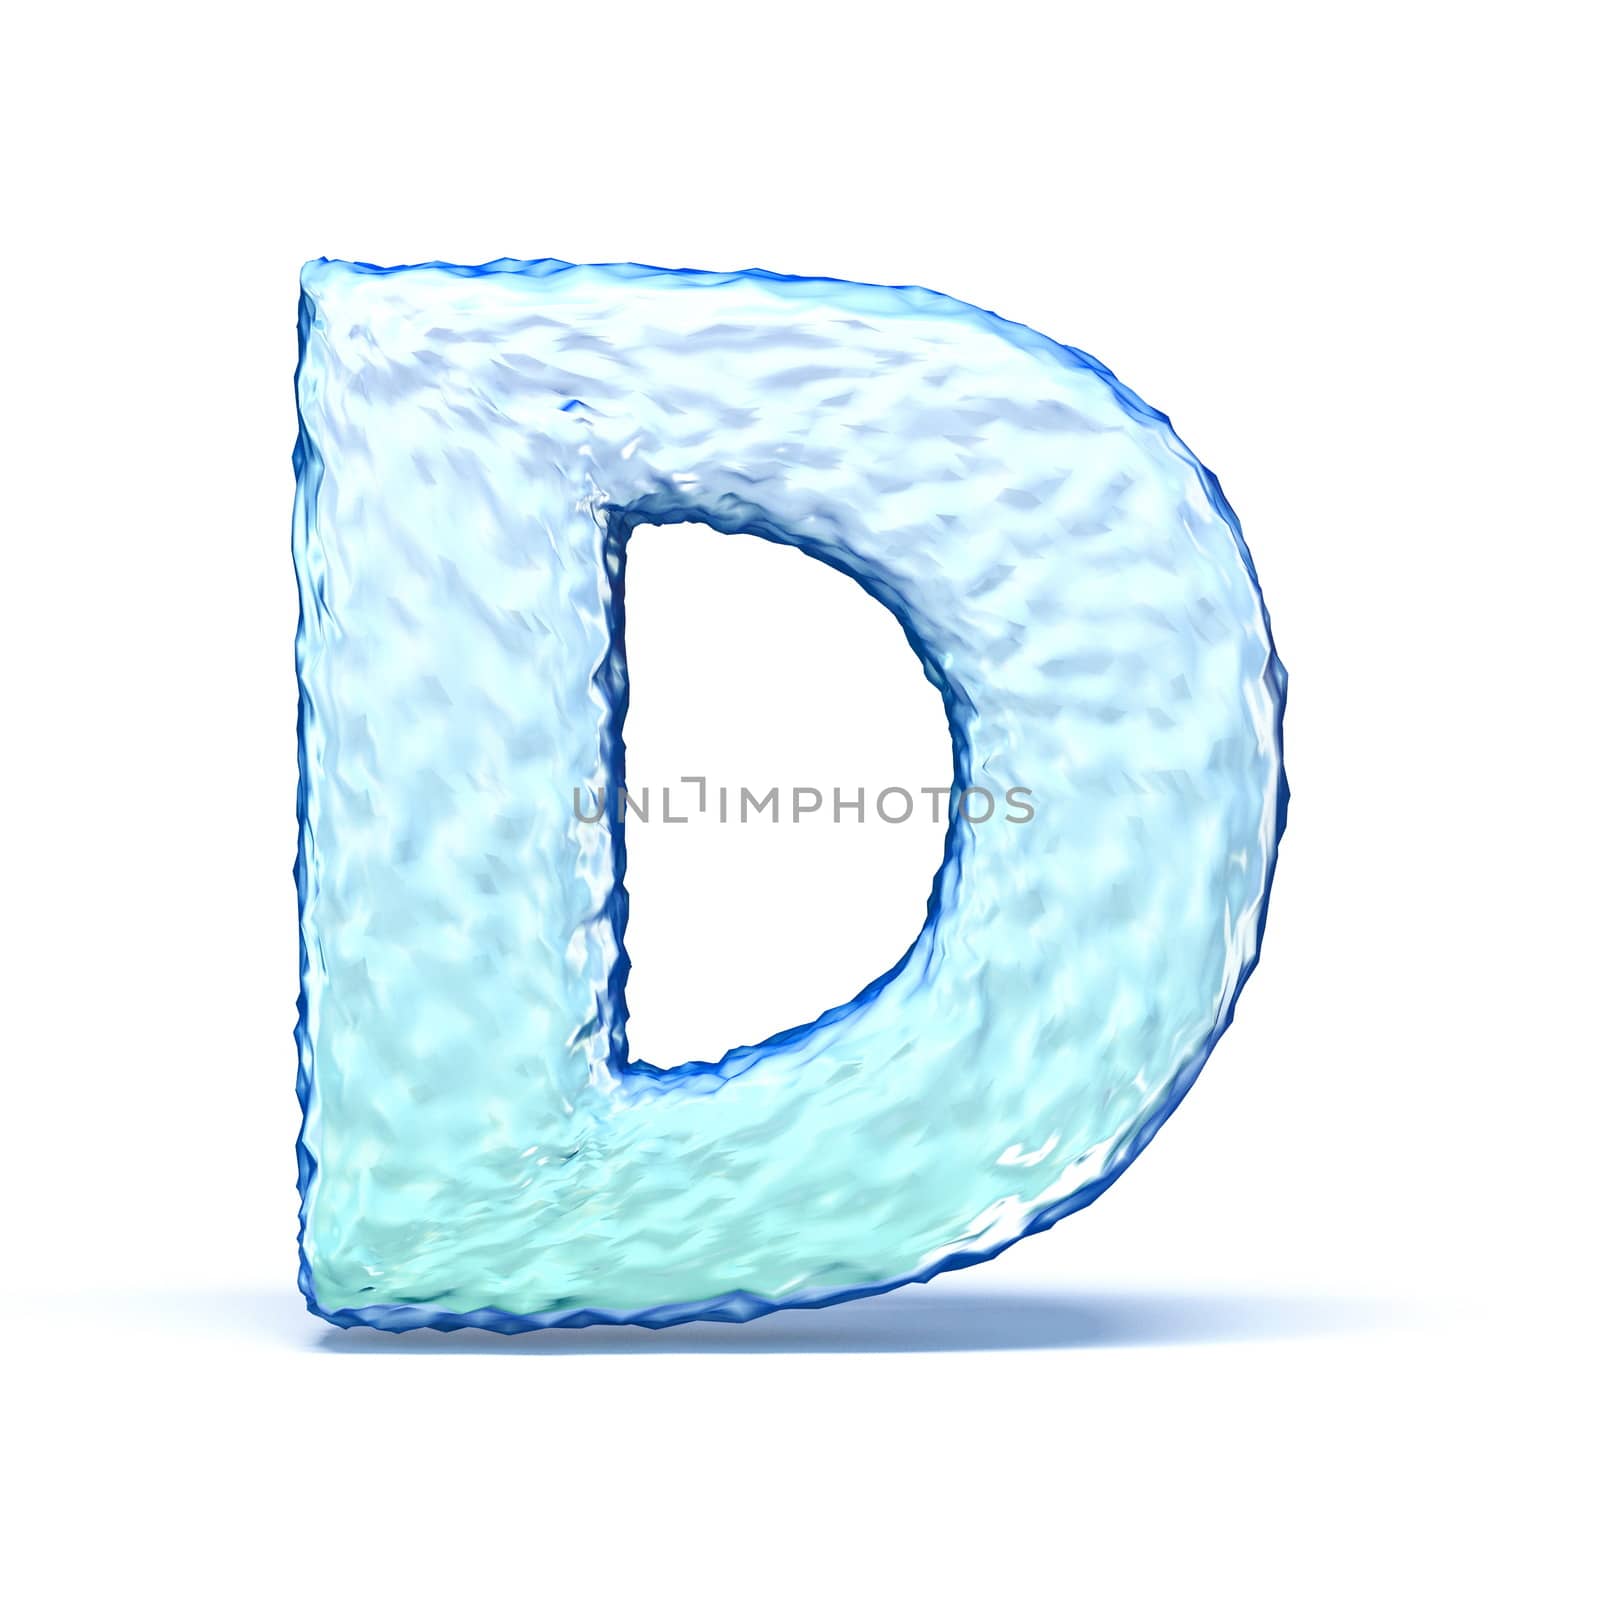 Ice crystal font letter D 3D render illustration isolated on white background